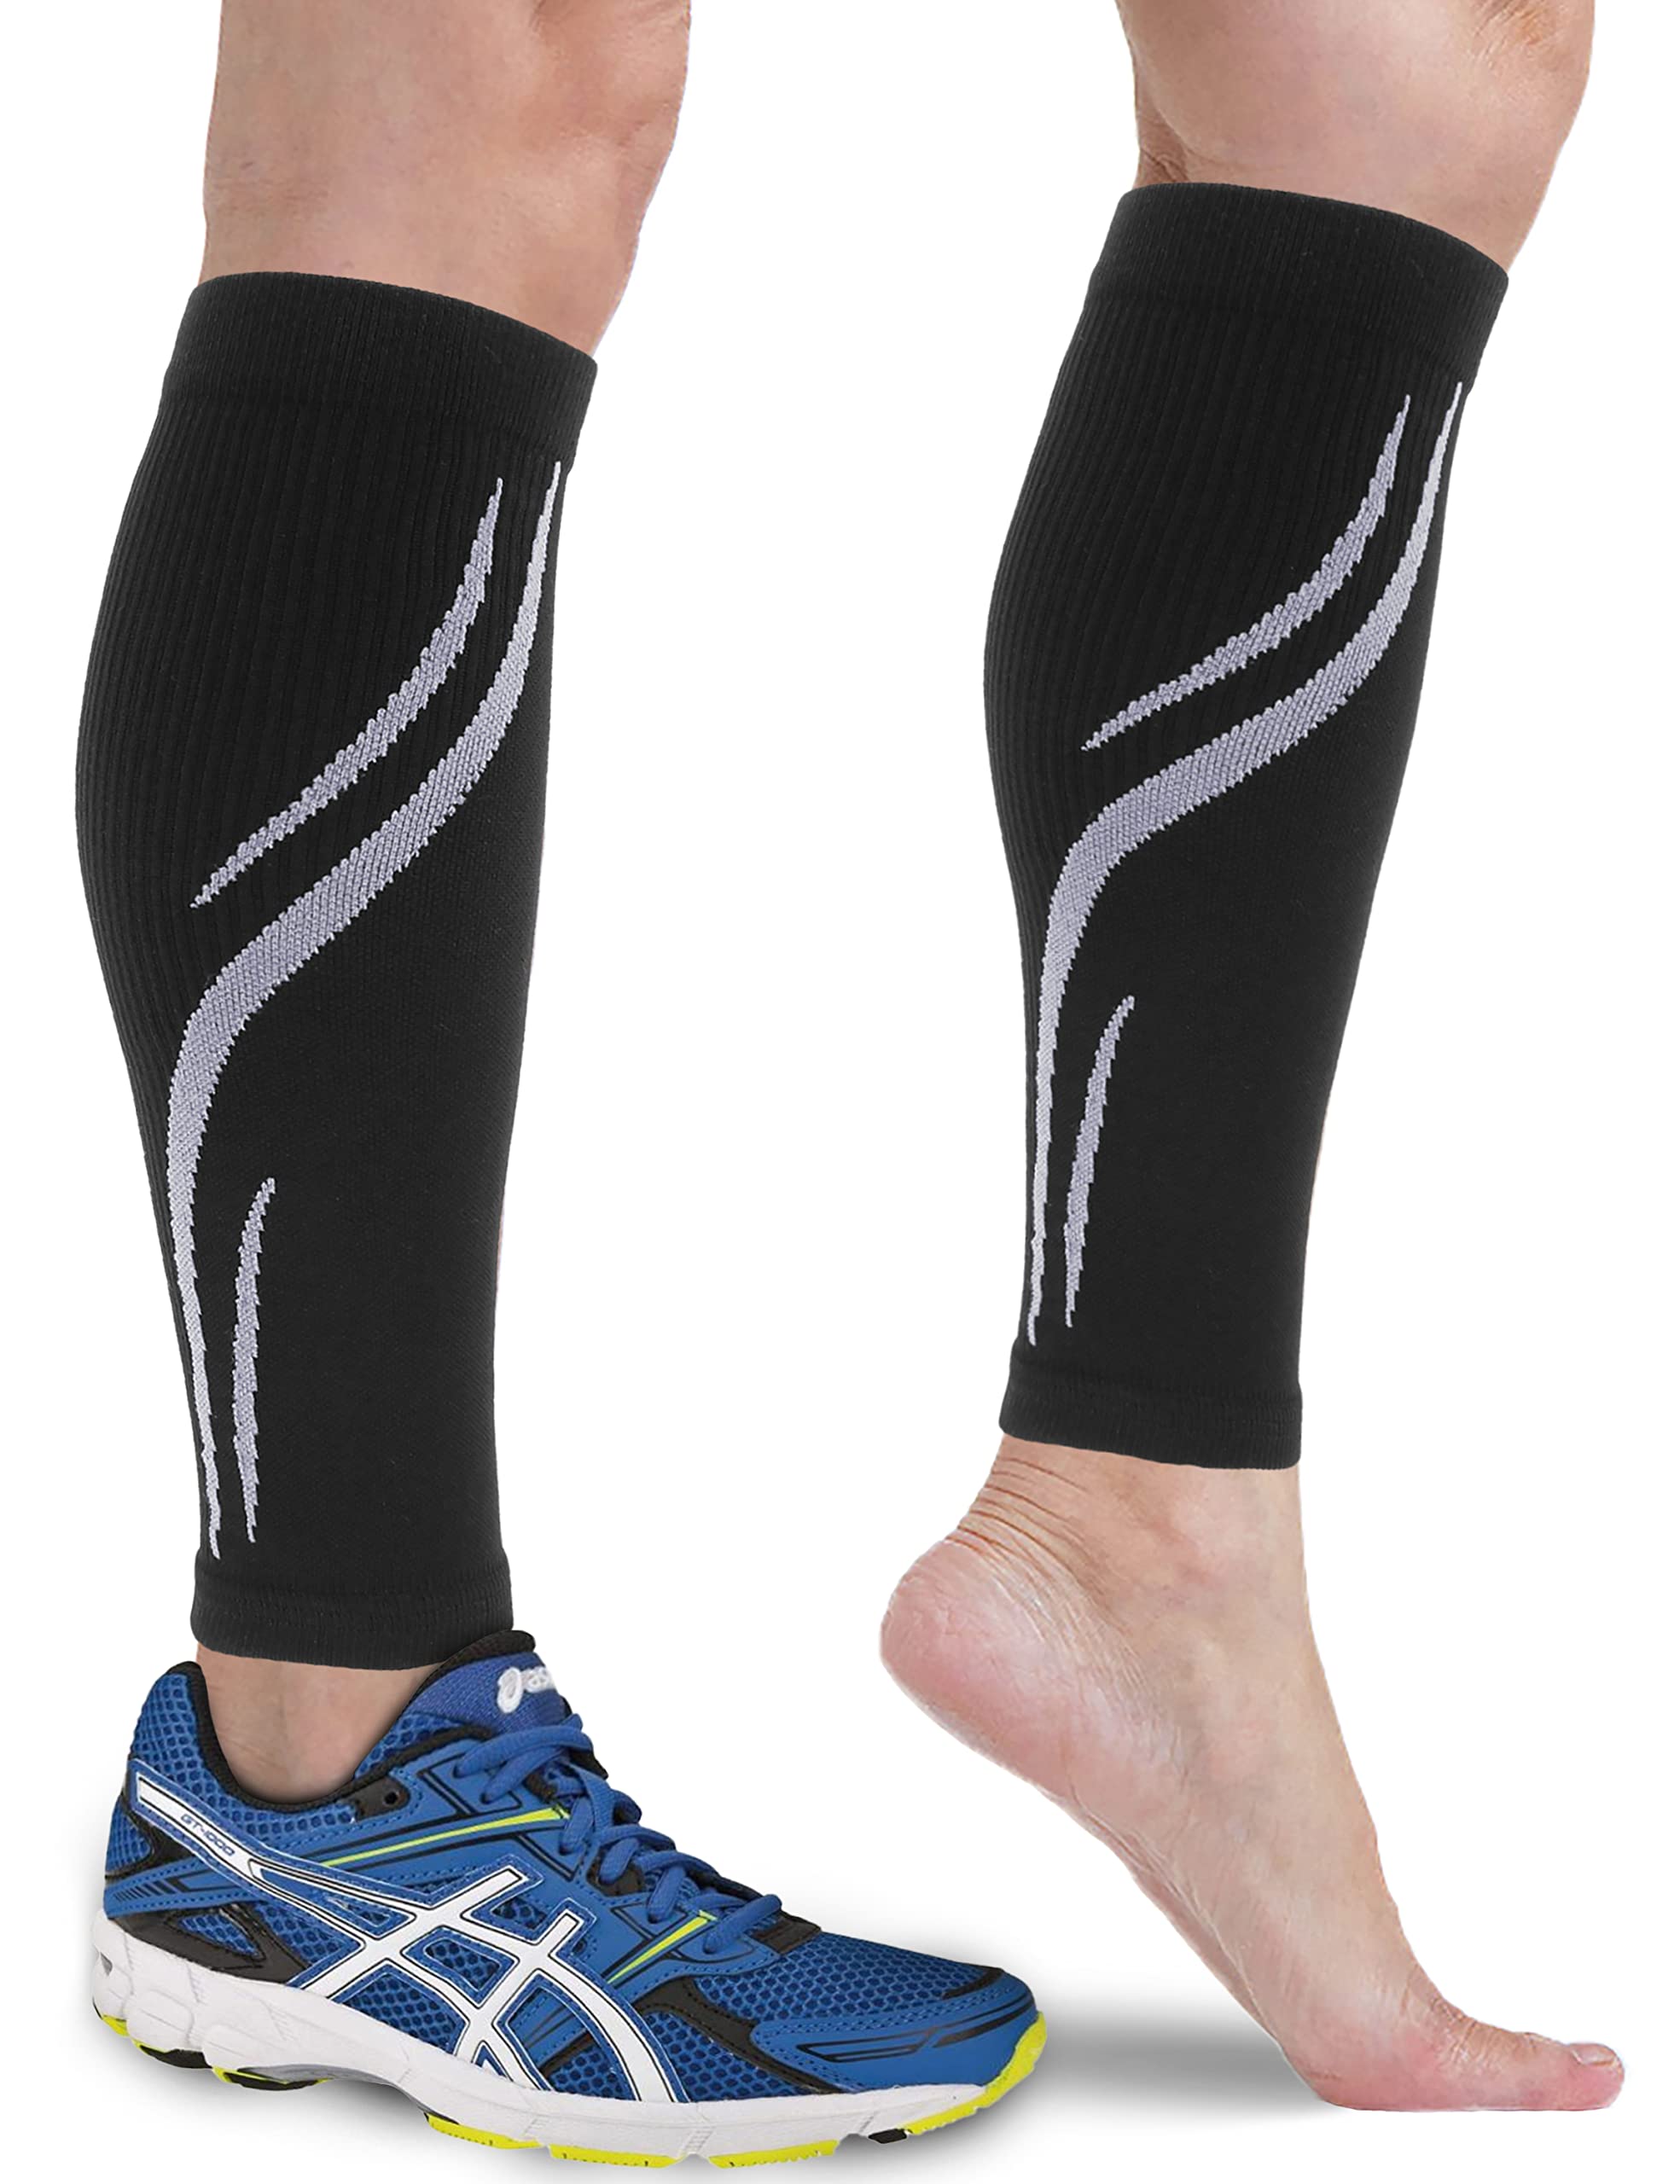 1 Pair Calf Compression Sleeve, Footless Socks 20-30mmHg for Leg